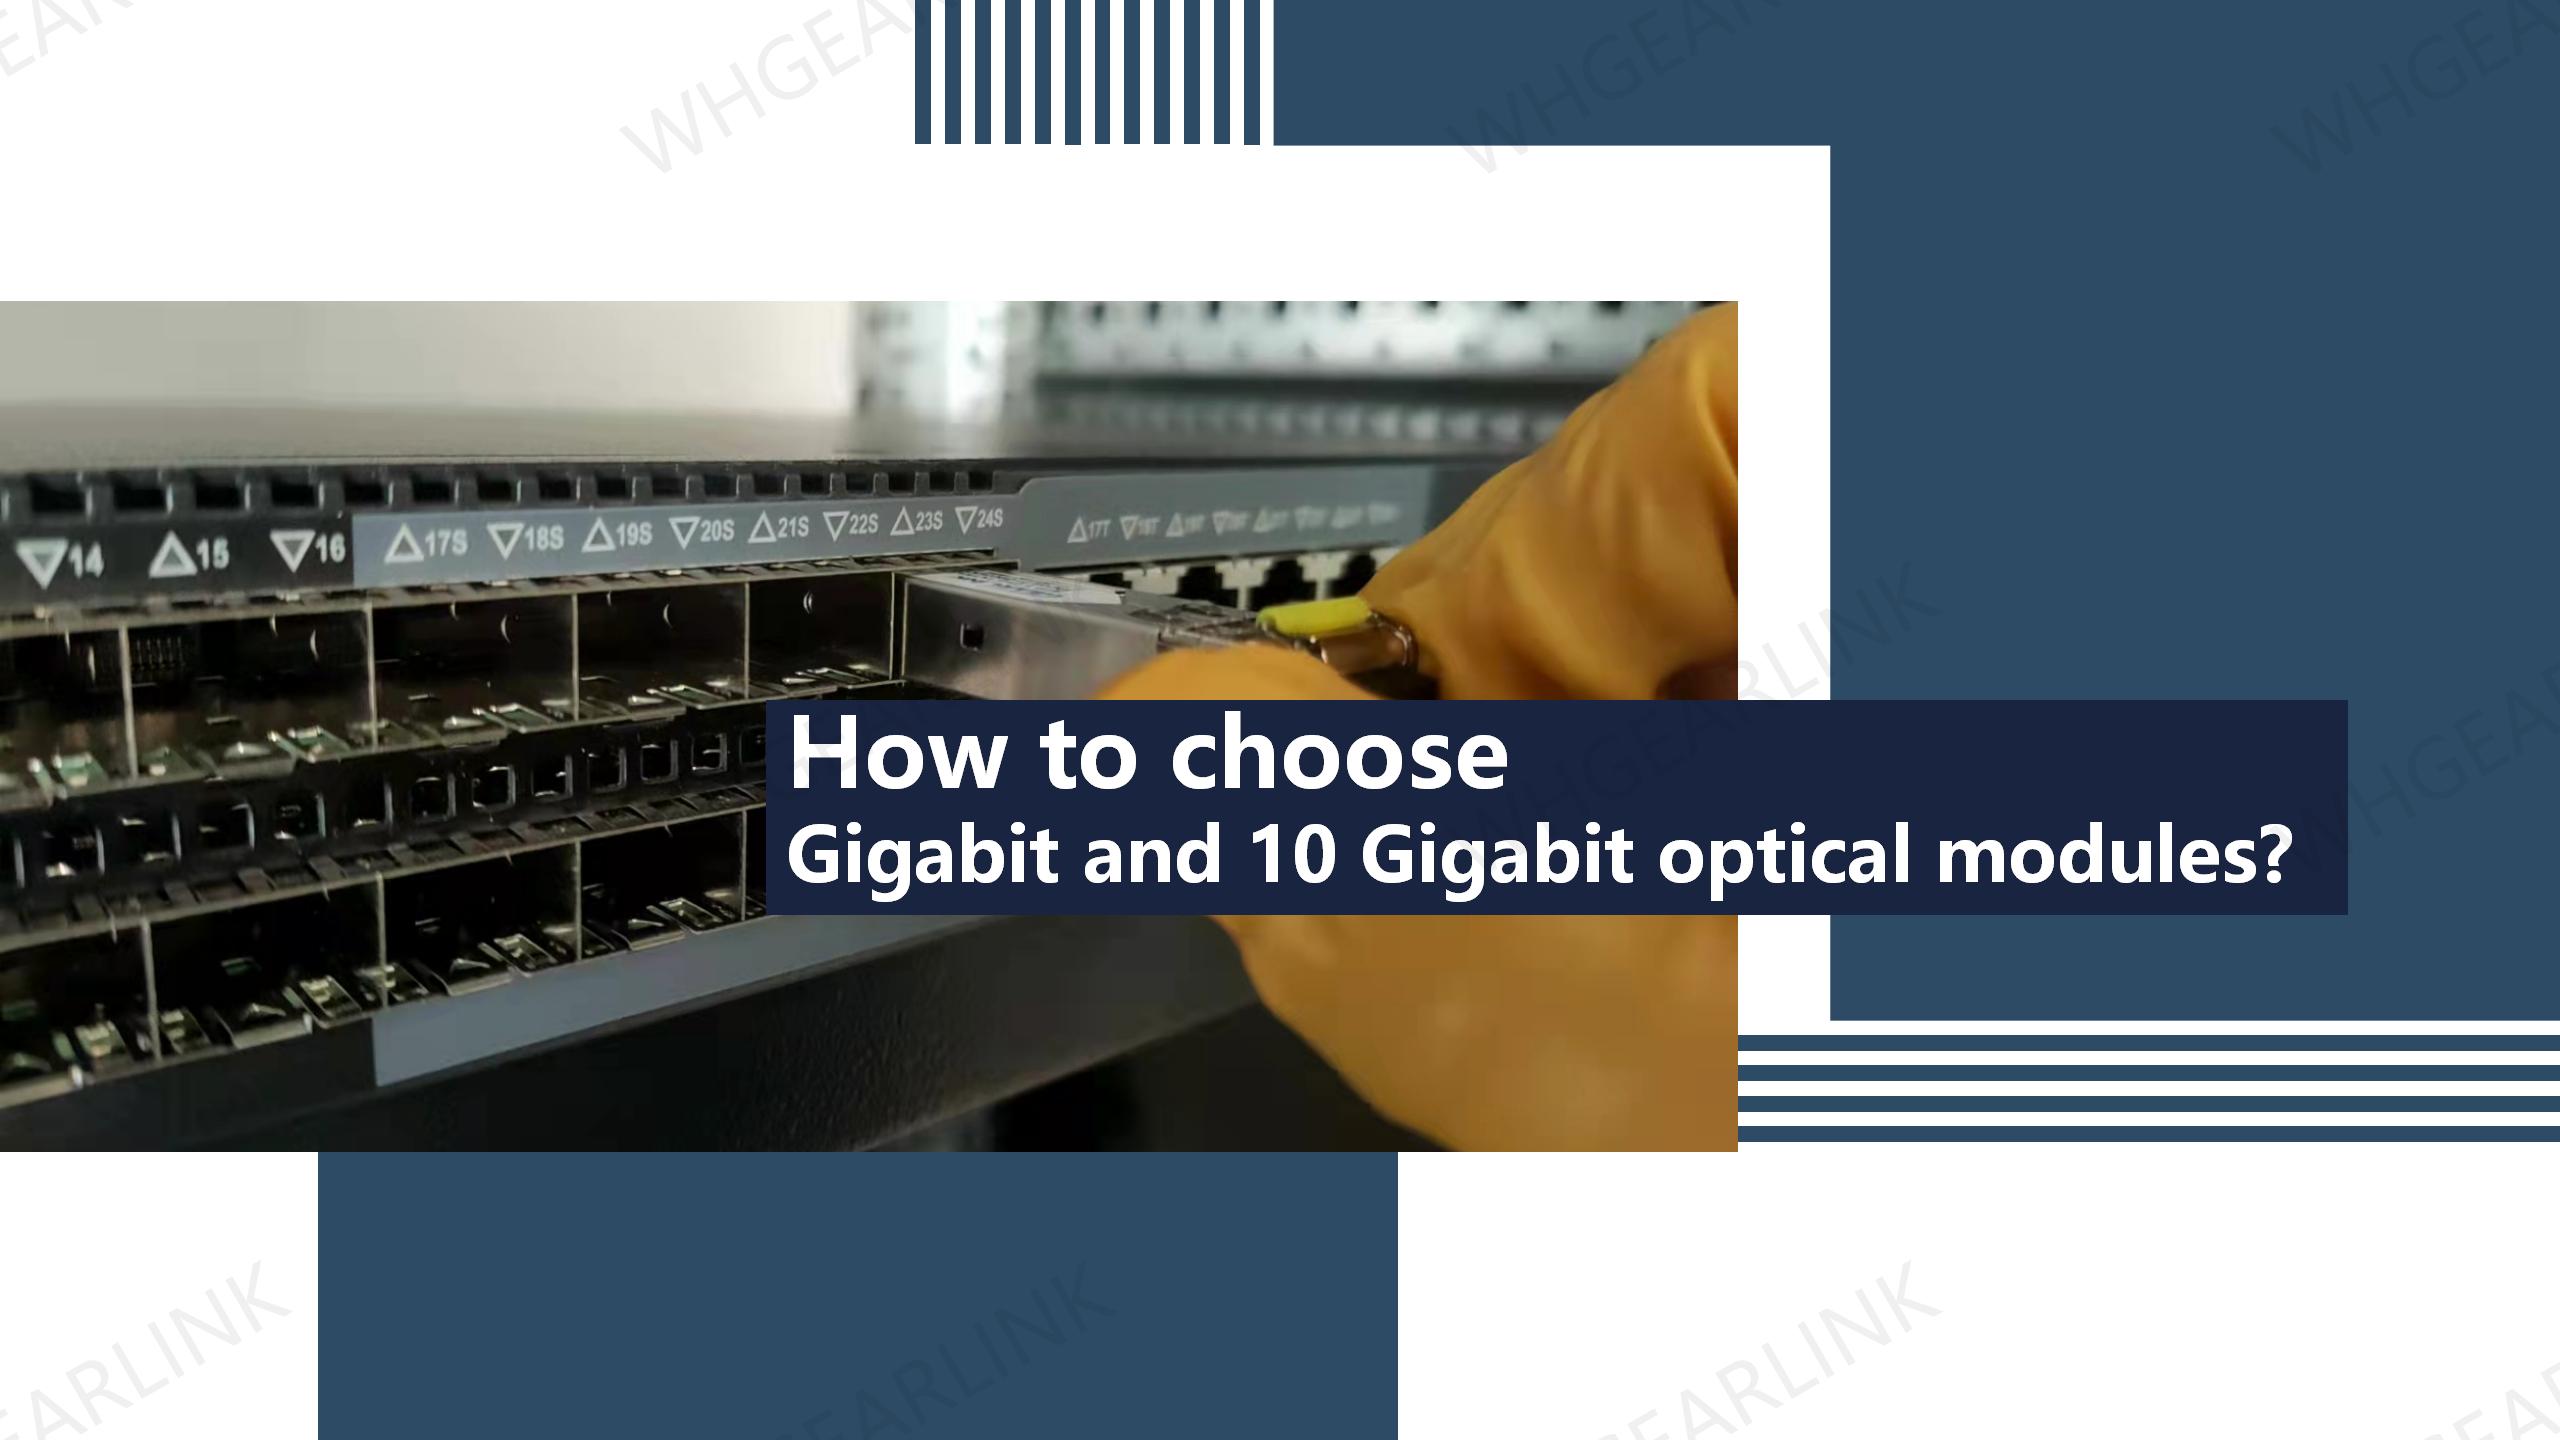 How to choose Gigabit and 10 Gigabit optical modules?